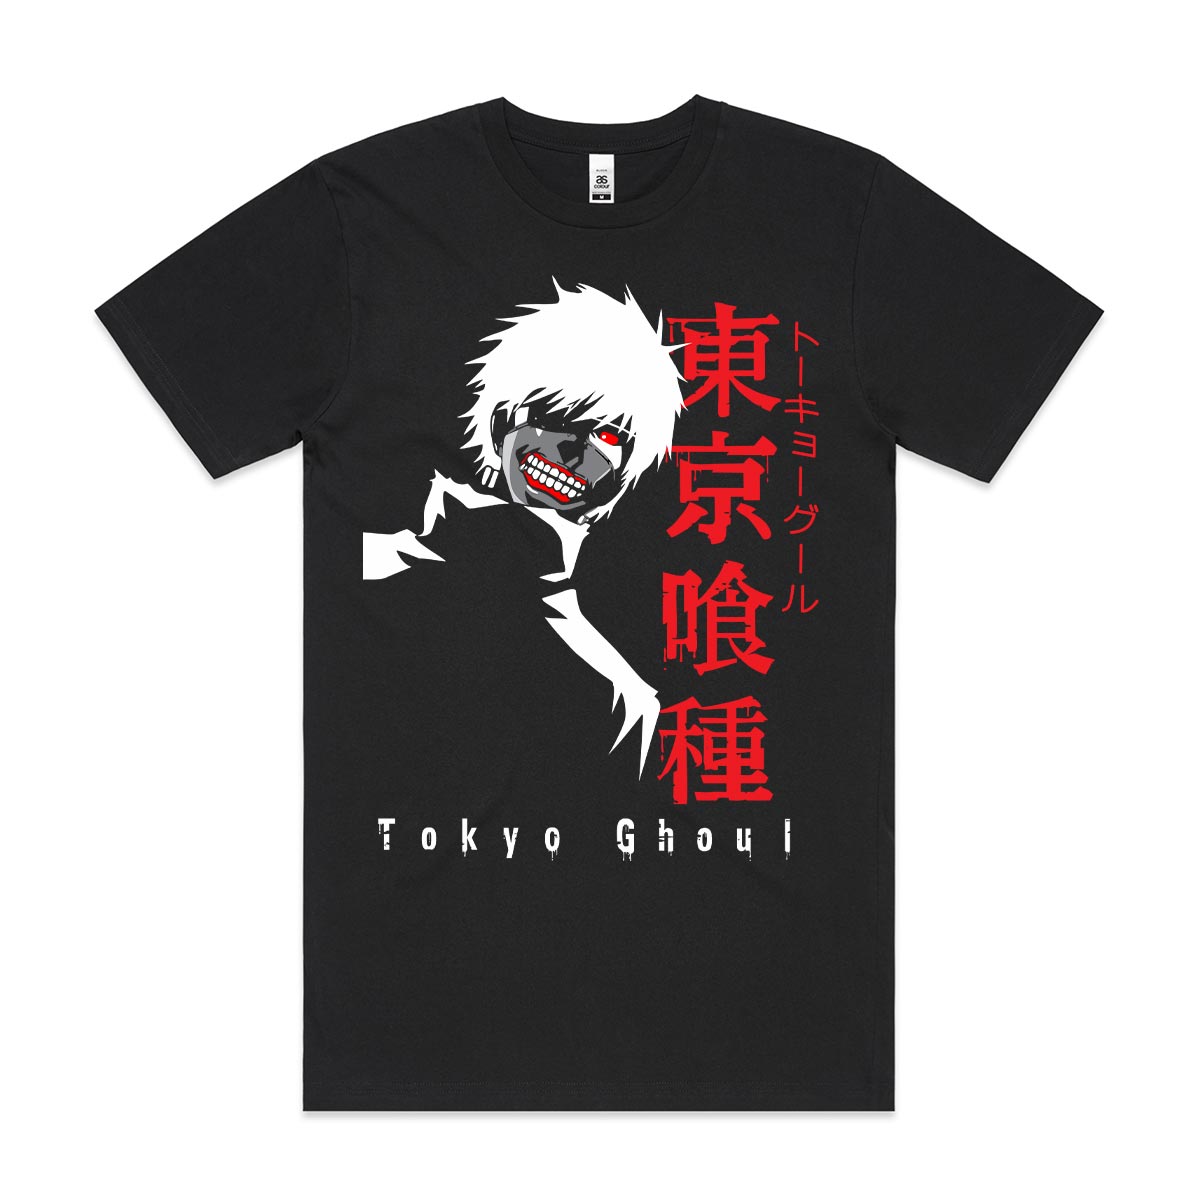 Tokyo Ghoul 02 T-shirt Japanese anime